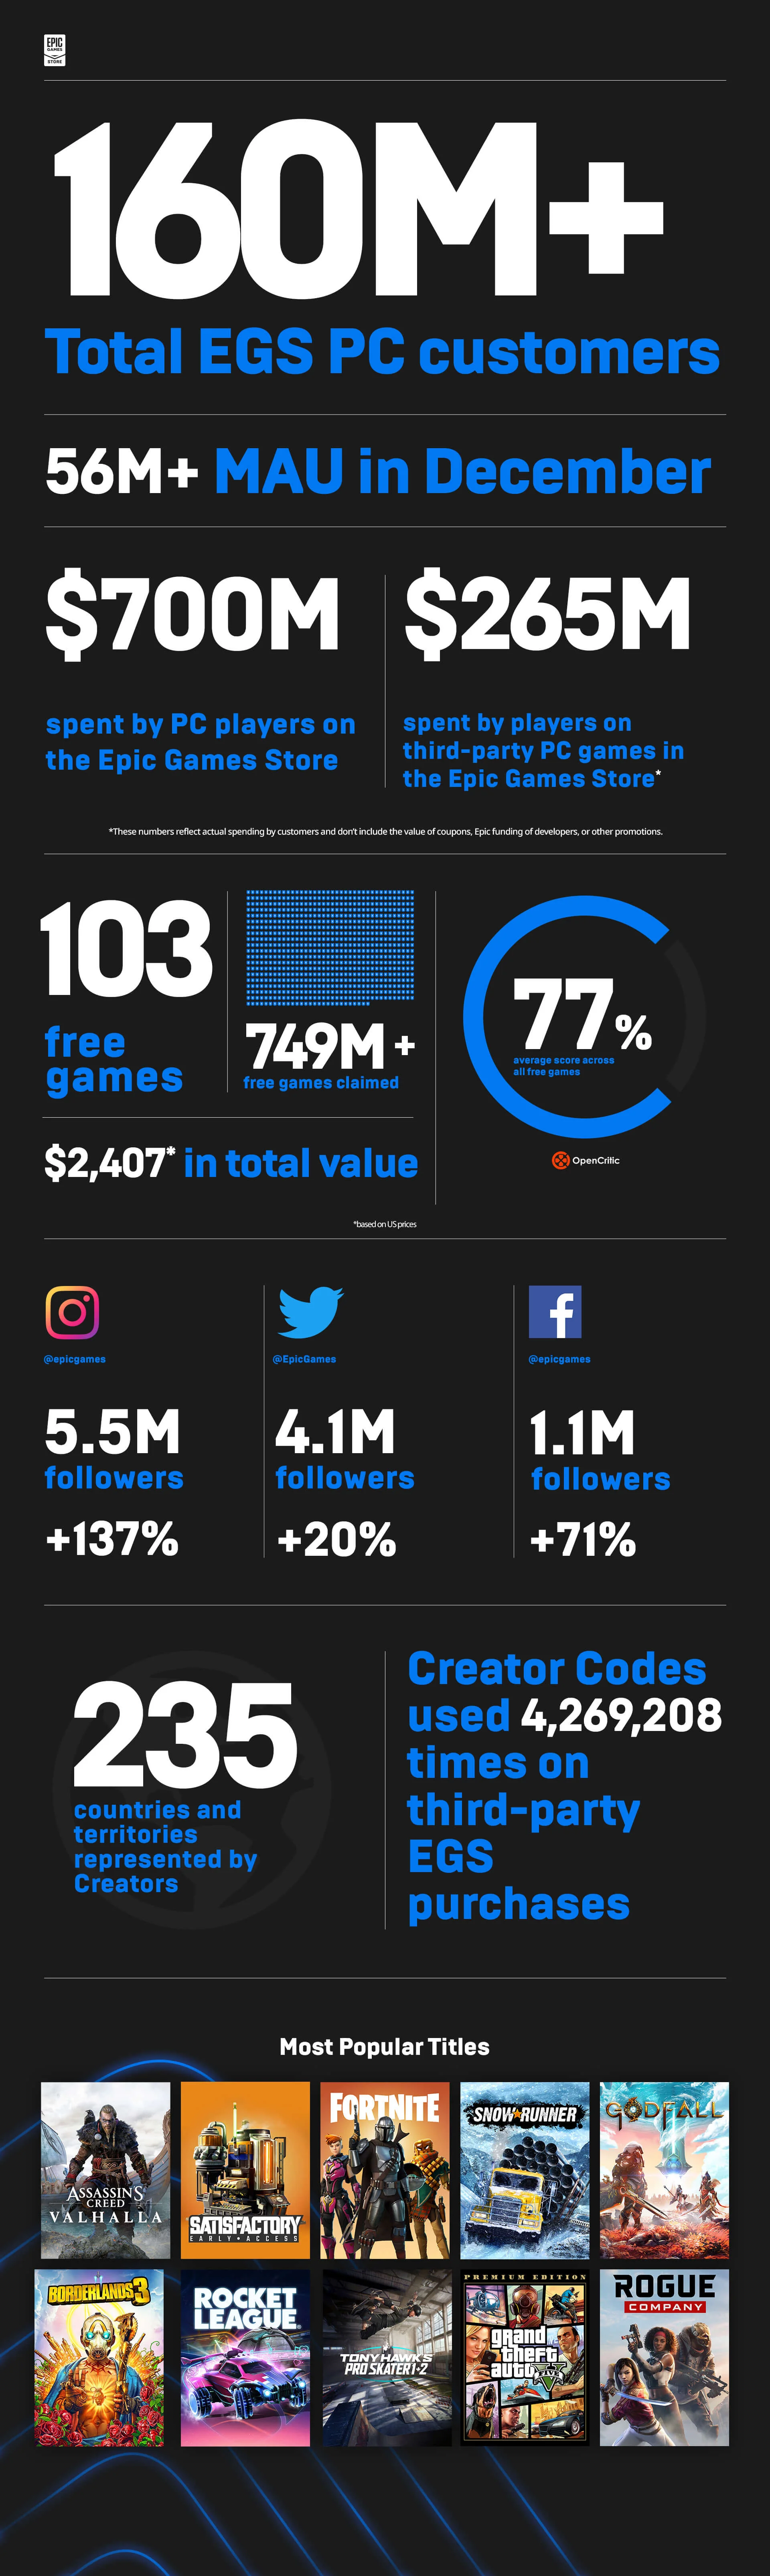 За год аудитория Epic Games Store выросла на 52 млн человек — итоги EGS за 2020-й - фото 1